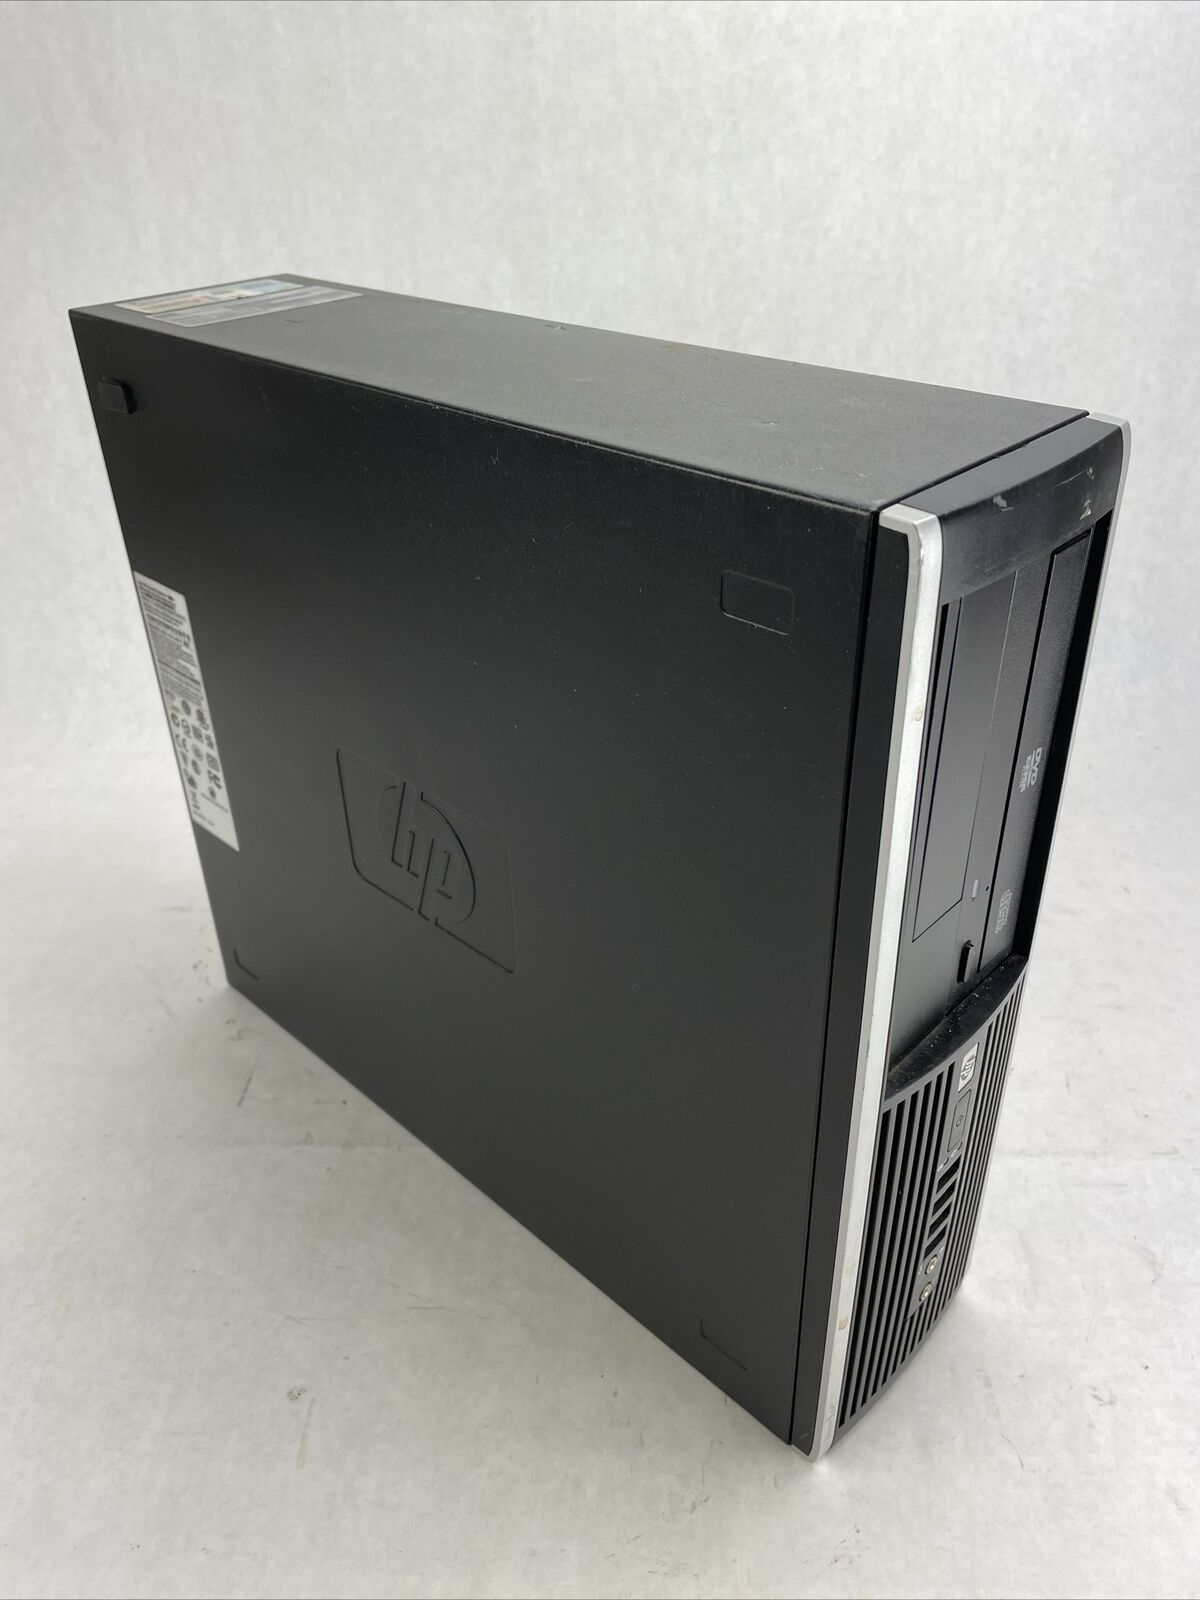 HP Compaq 6000 Pro SFF Intel Pentium Dual-Core E6300 2.8GHz 4GB RAM No HDD/OS